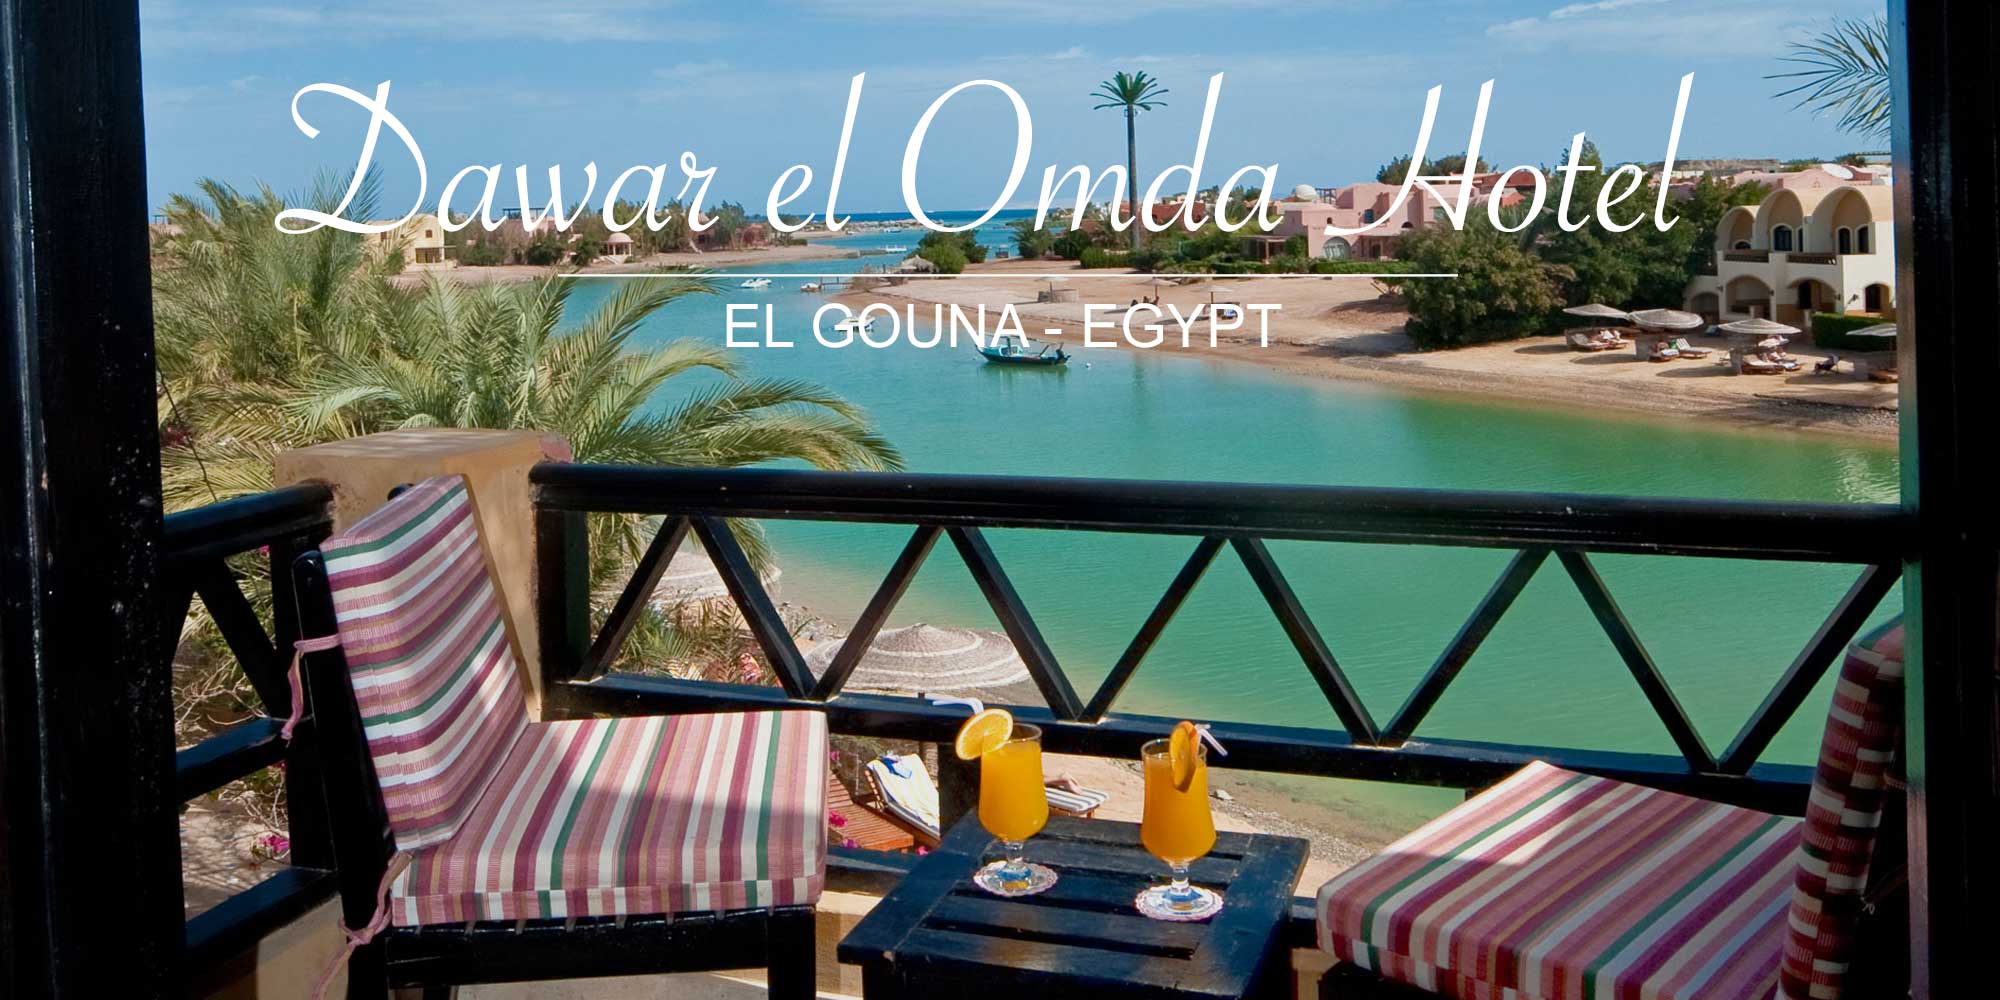 Dawar el Omda Hotel El Gouna